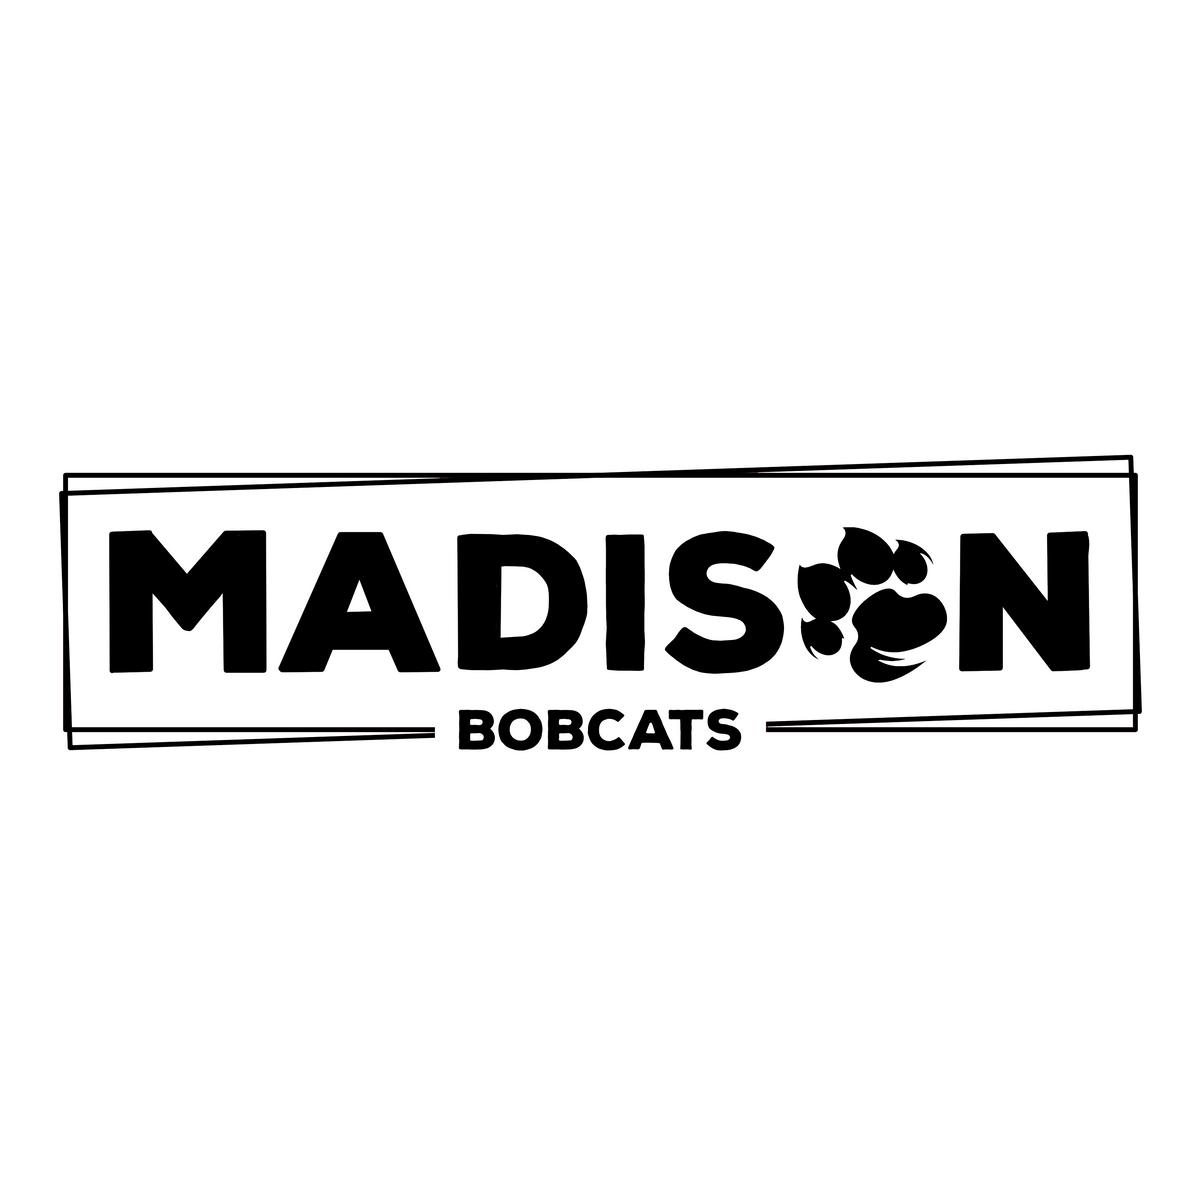 MADISON BOBCATS